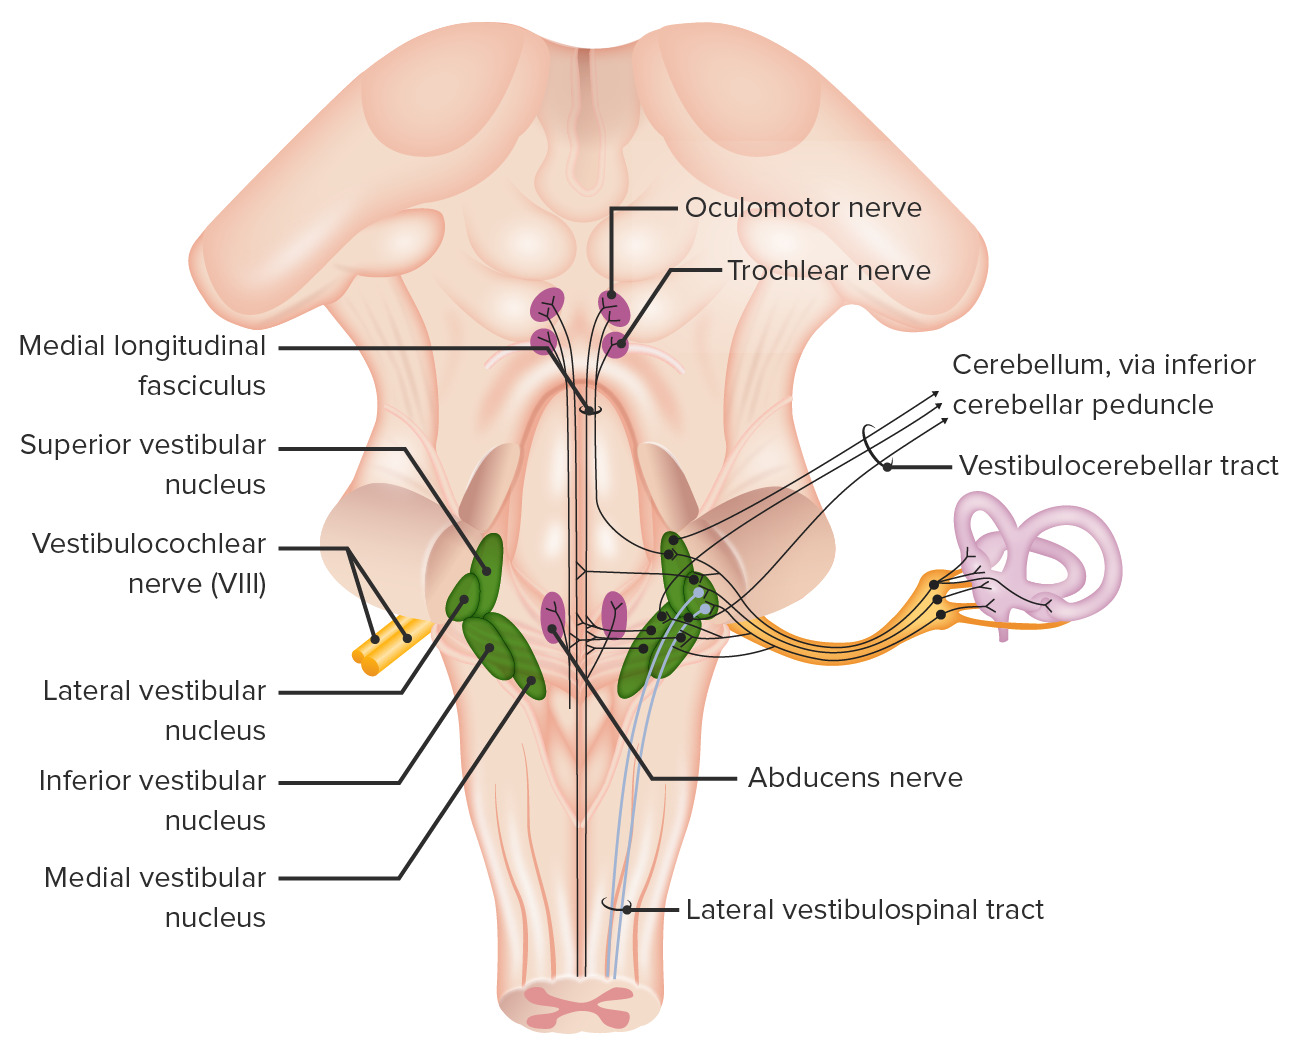 Intricate pathways of the vestibular system